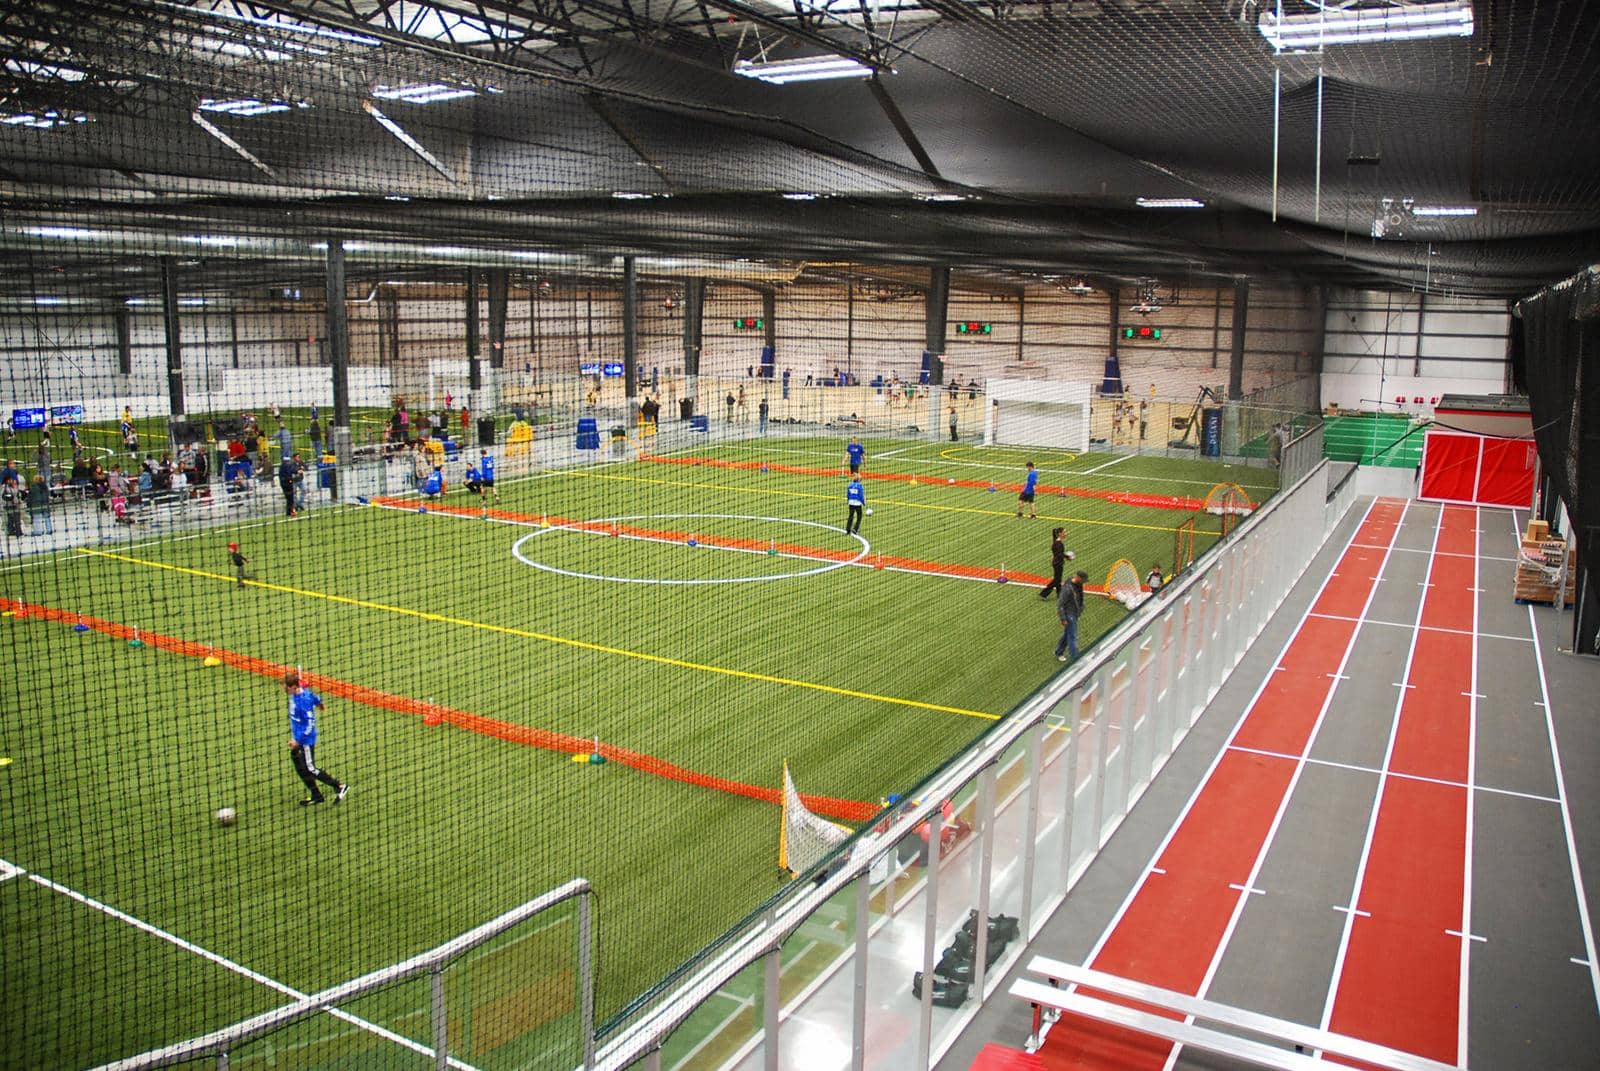 Multi sport Indoor Facility: XL Sports World, Hatfield, PA